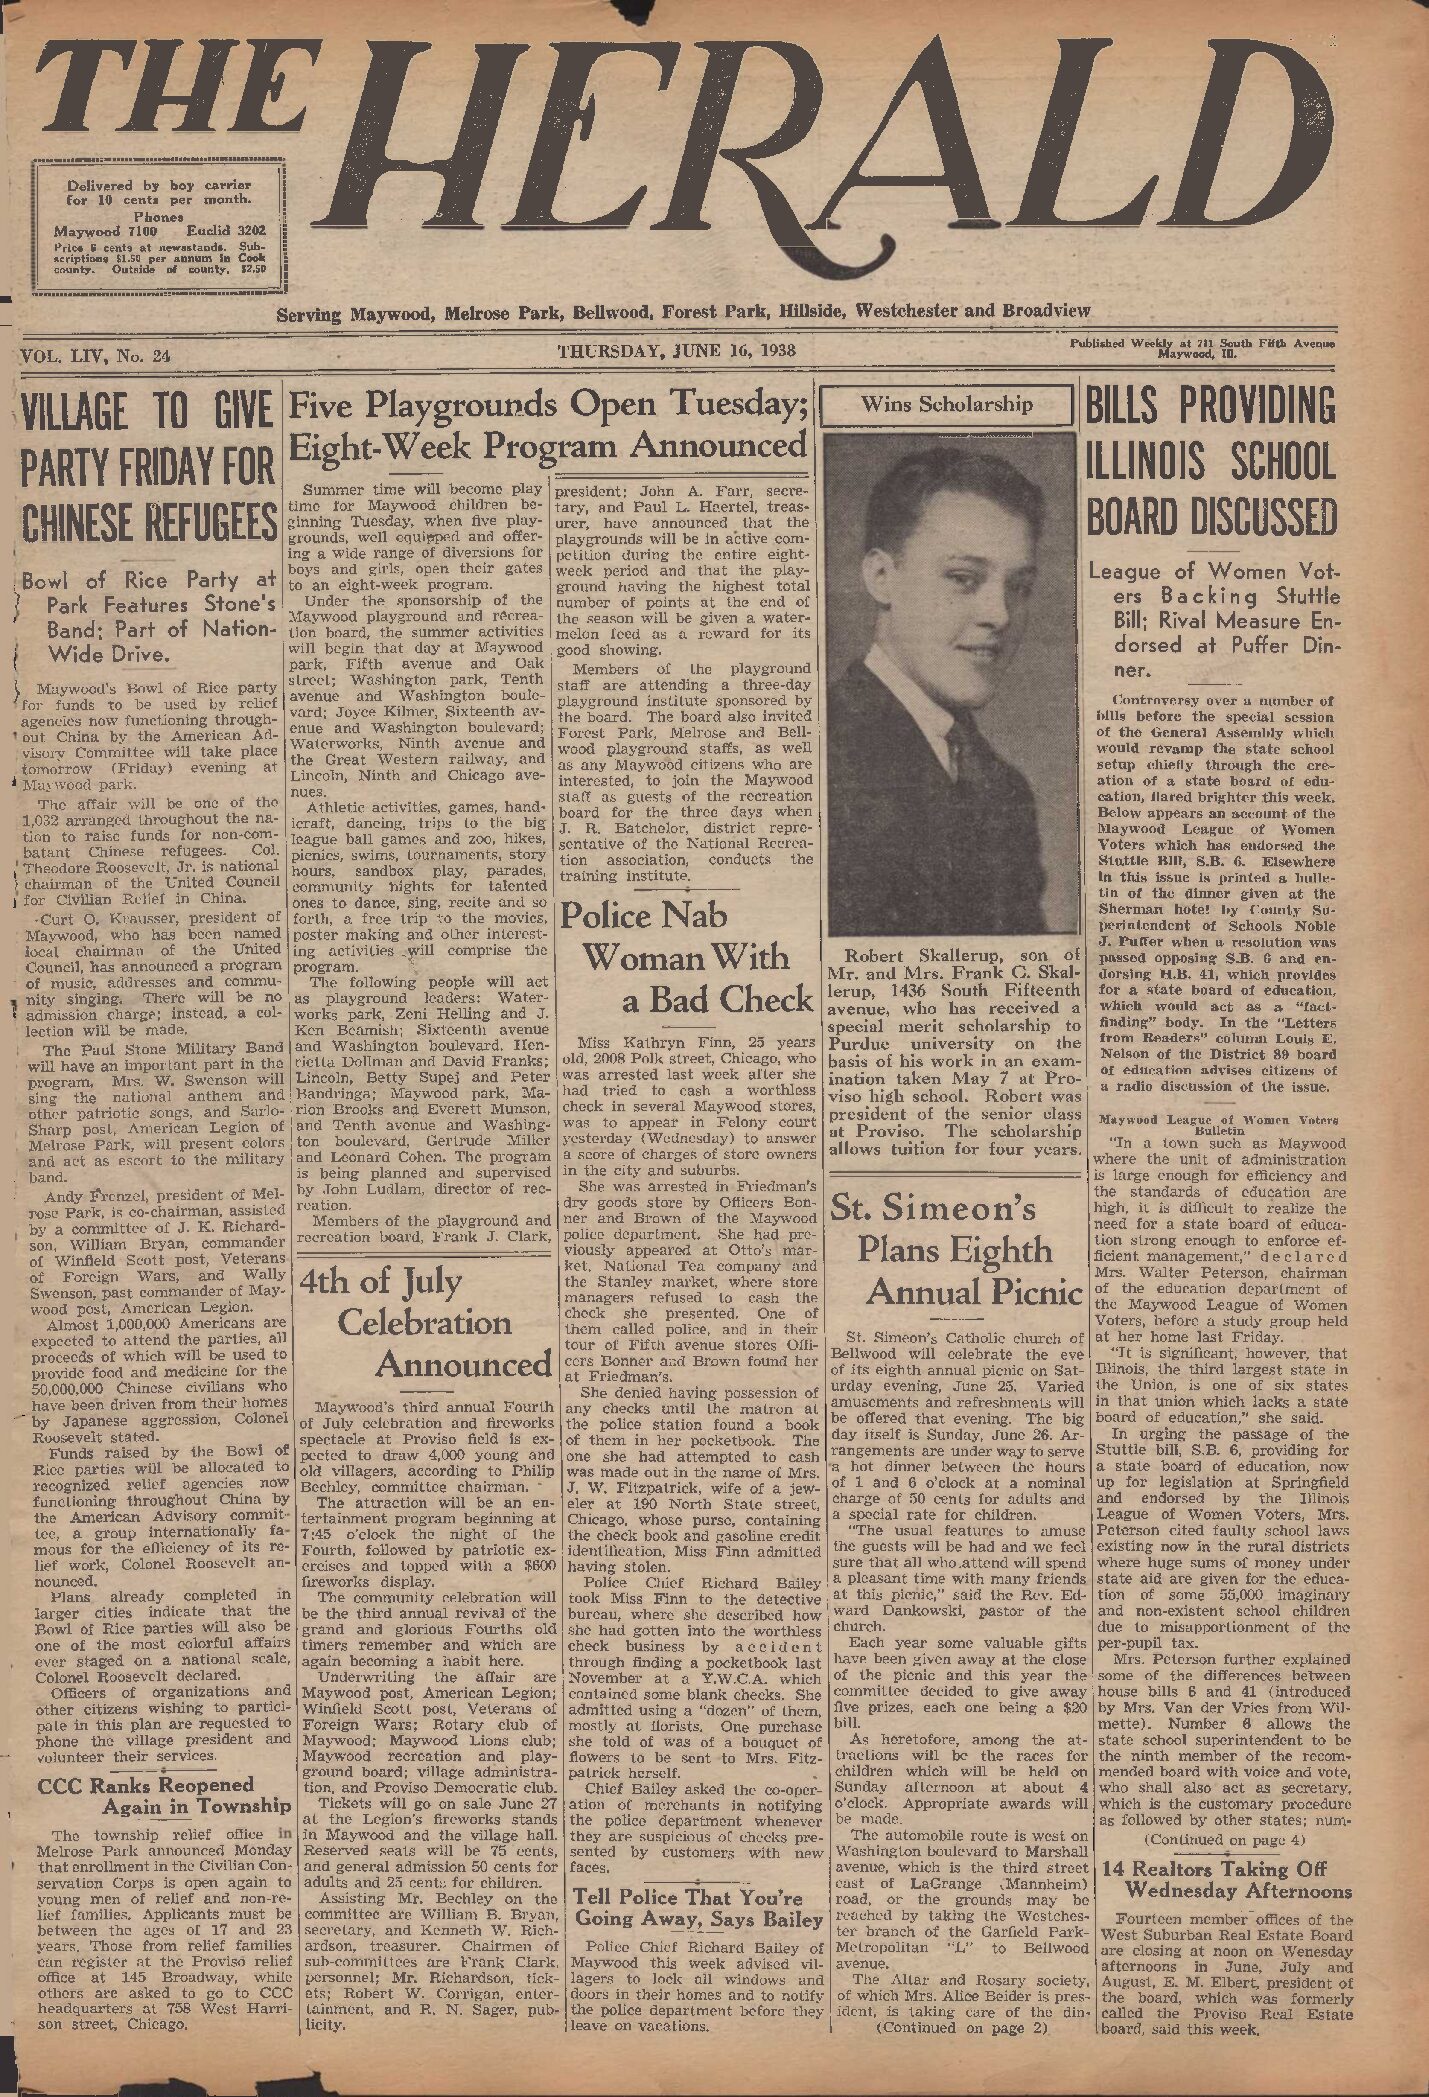 The Herald – 19380616